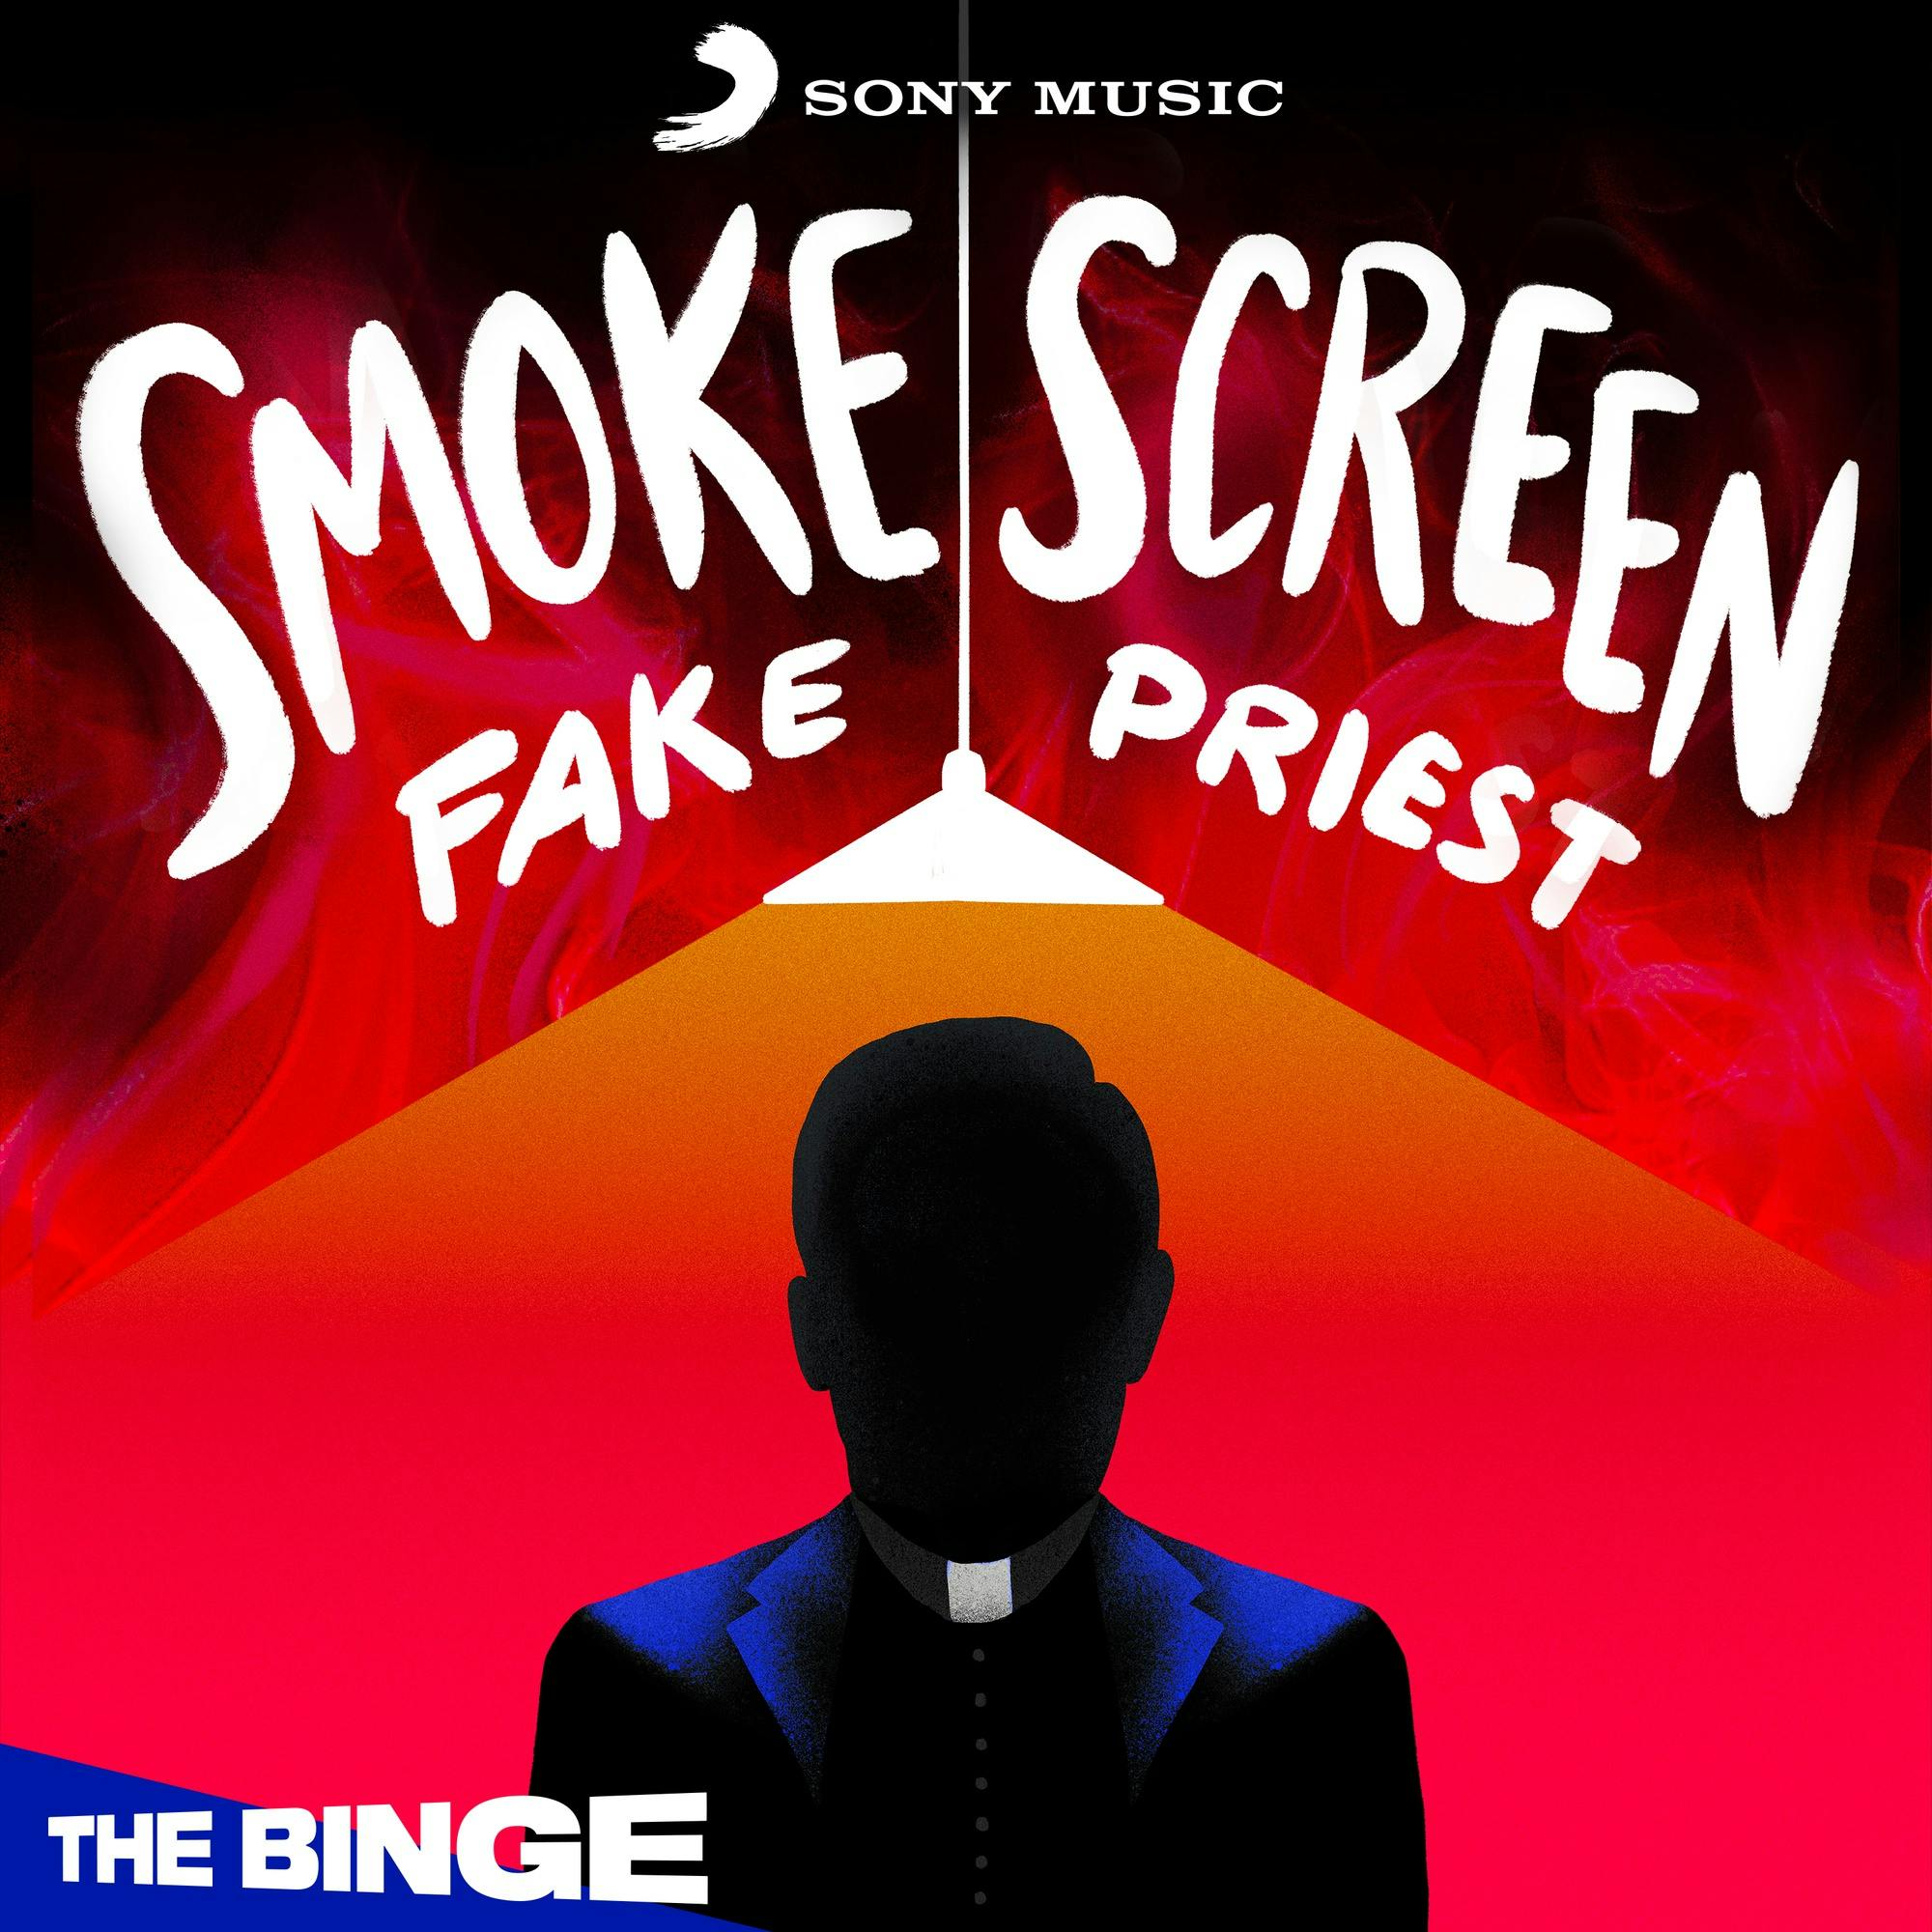 Introducing Smoke Screen: Fake Priest